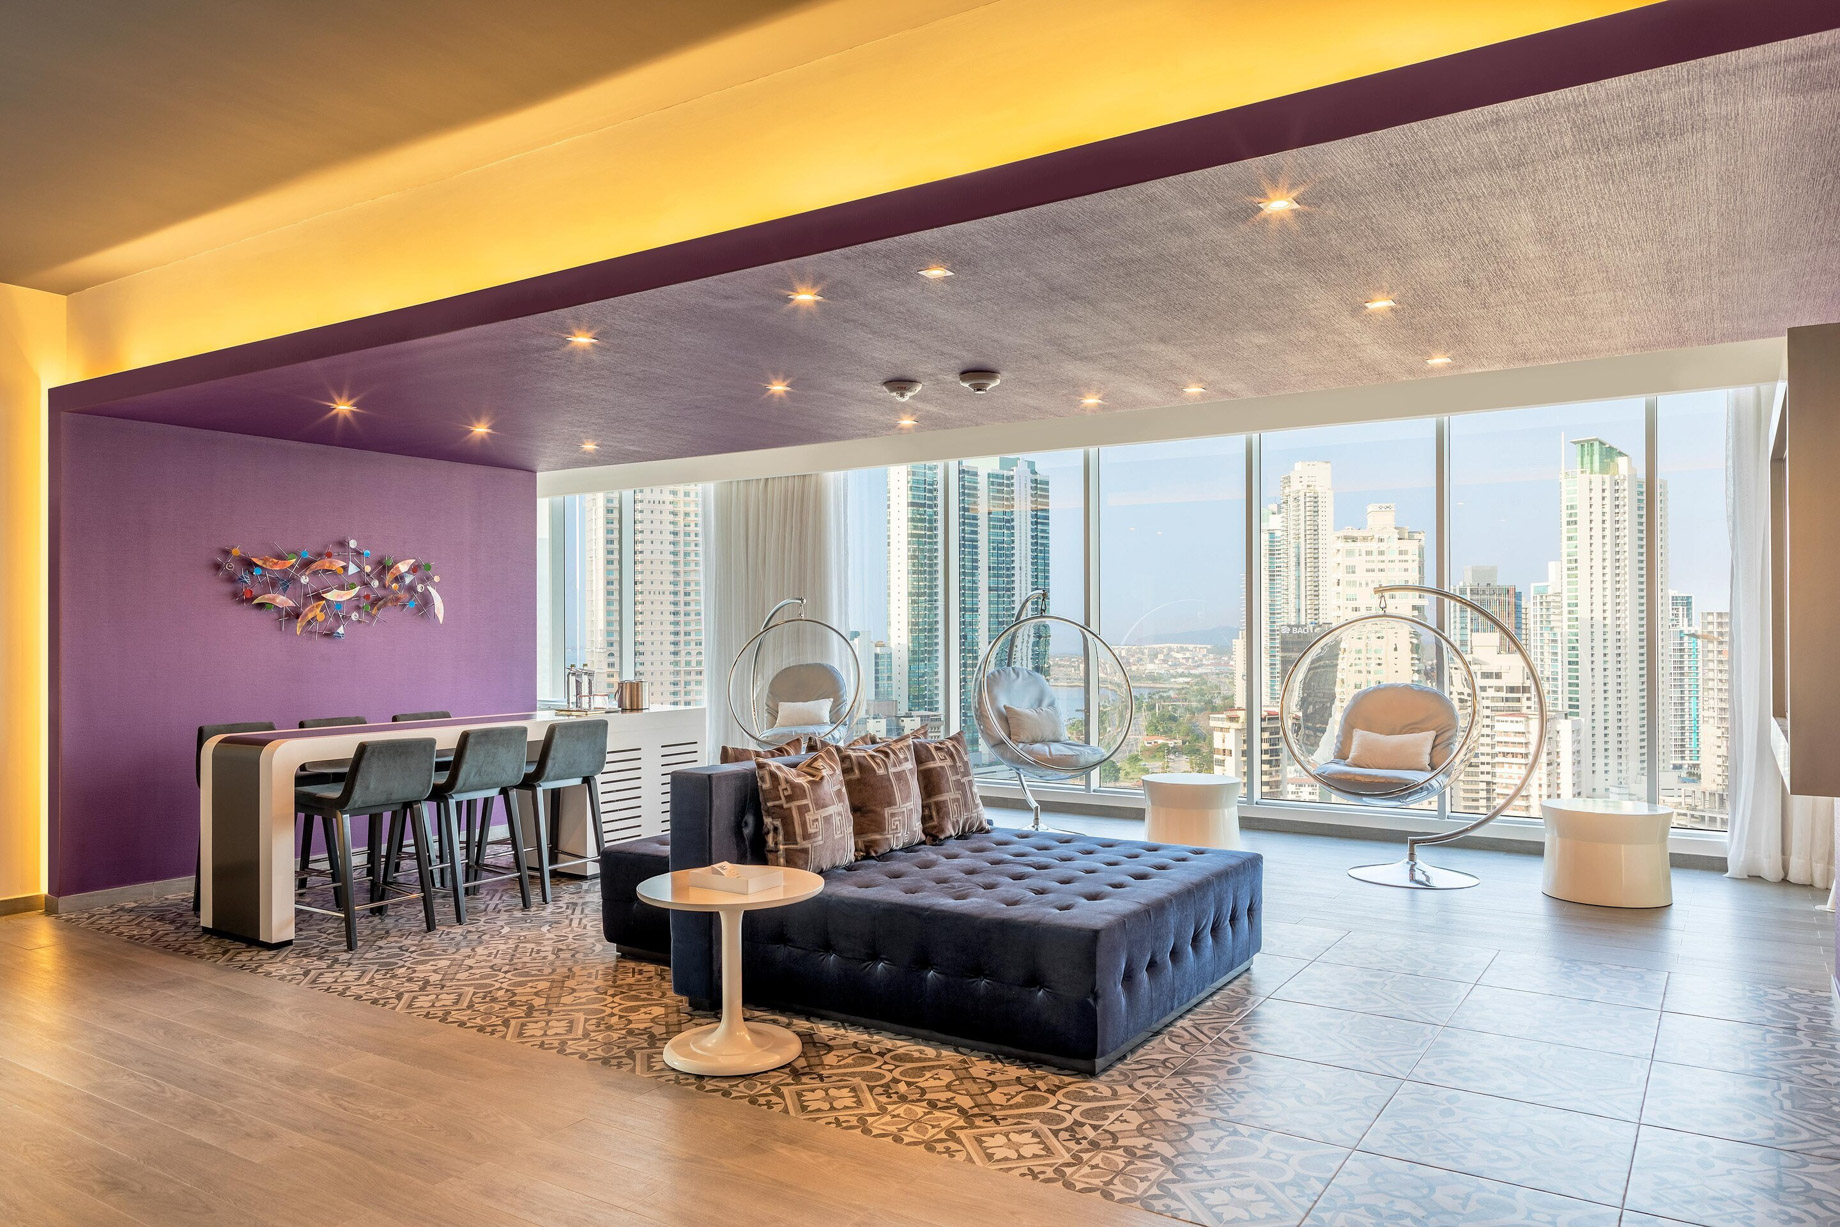 W Panama Hotel – Panama City, Panama – Wow Suite Living Room Decor